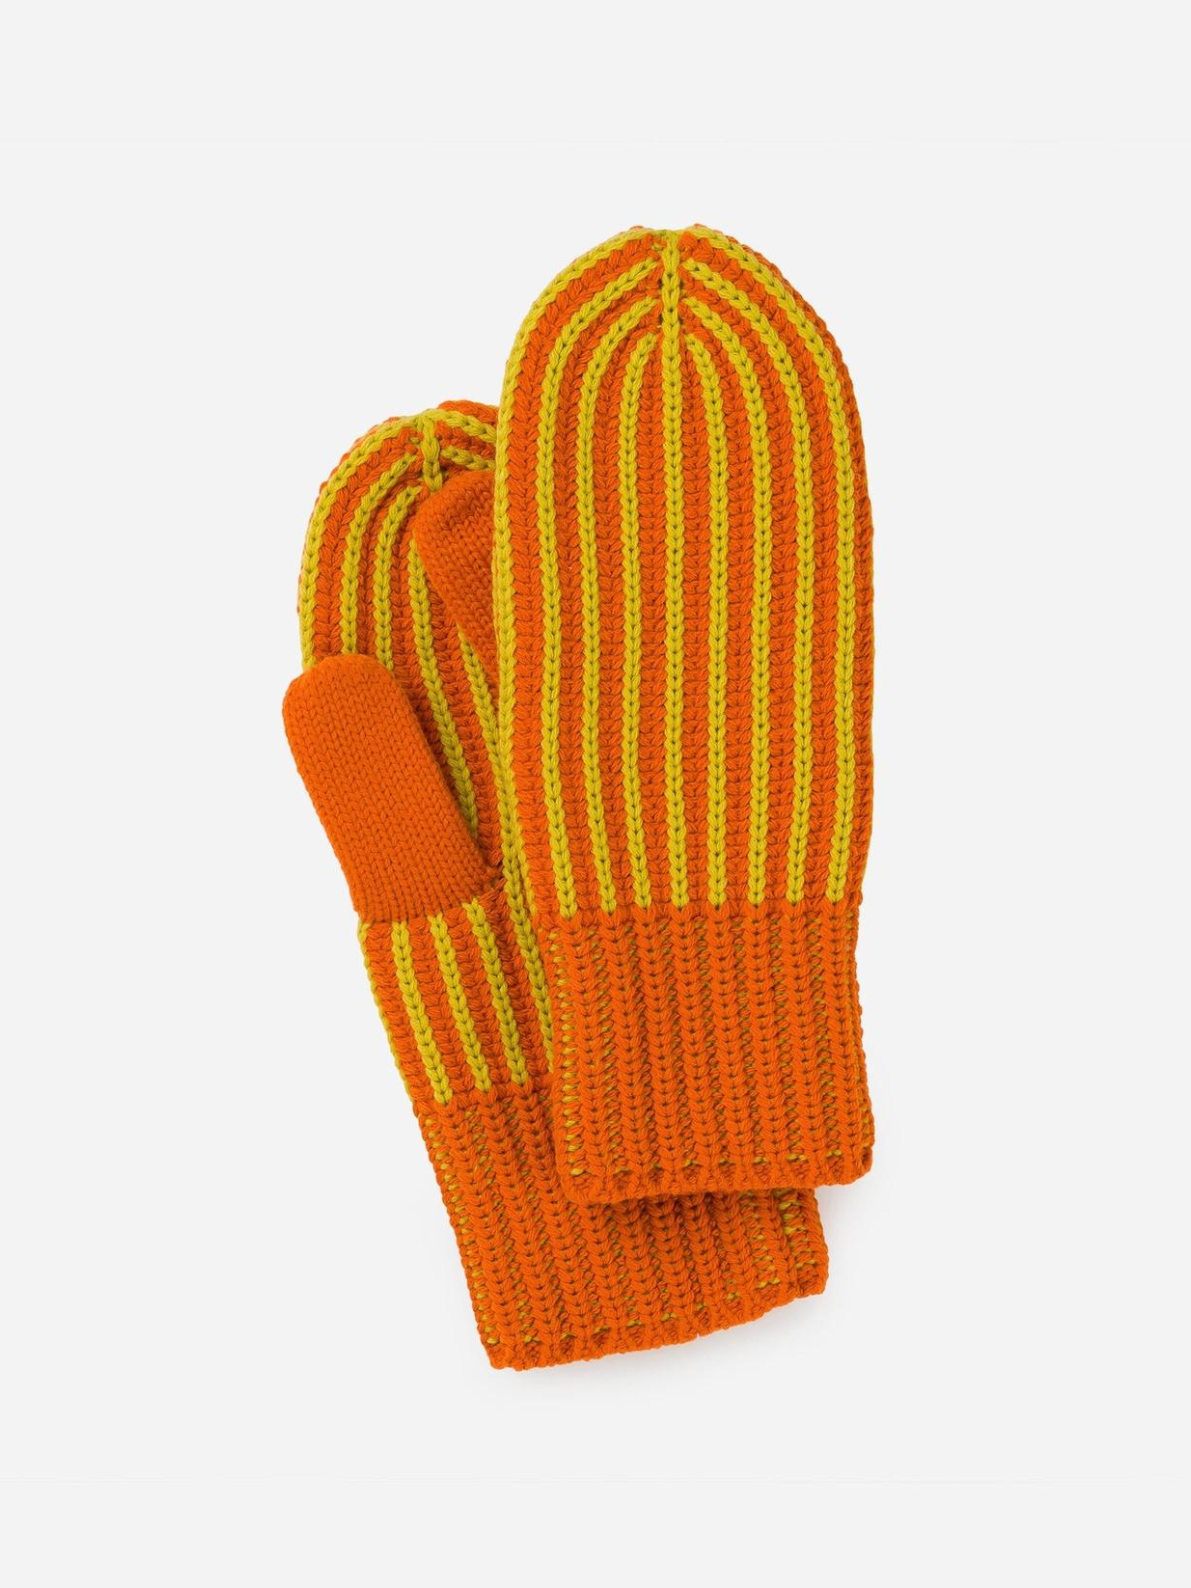 Verloop - Orange Chunky Rib Knit Mittens